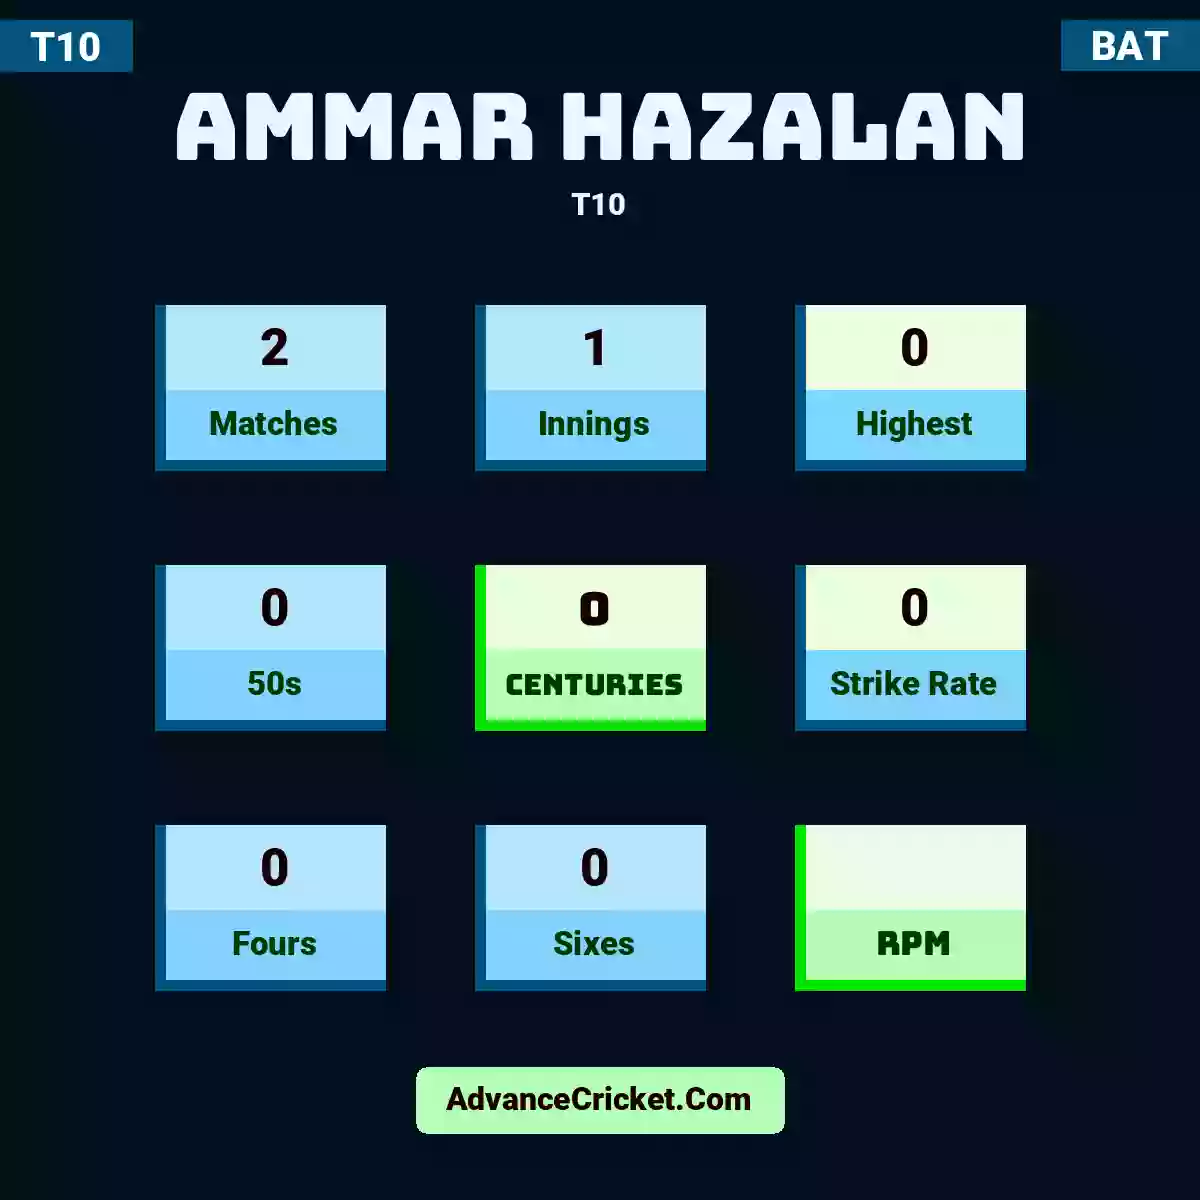 Ammar Hazalan T10 , Ammar Hazalan played 2 matches, scored 0 runs as highest, 0 half-centuries, and 0 centuries, with a strike rate of 0. A.Hazalan hit 0 fours and 0 sixes.